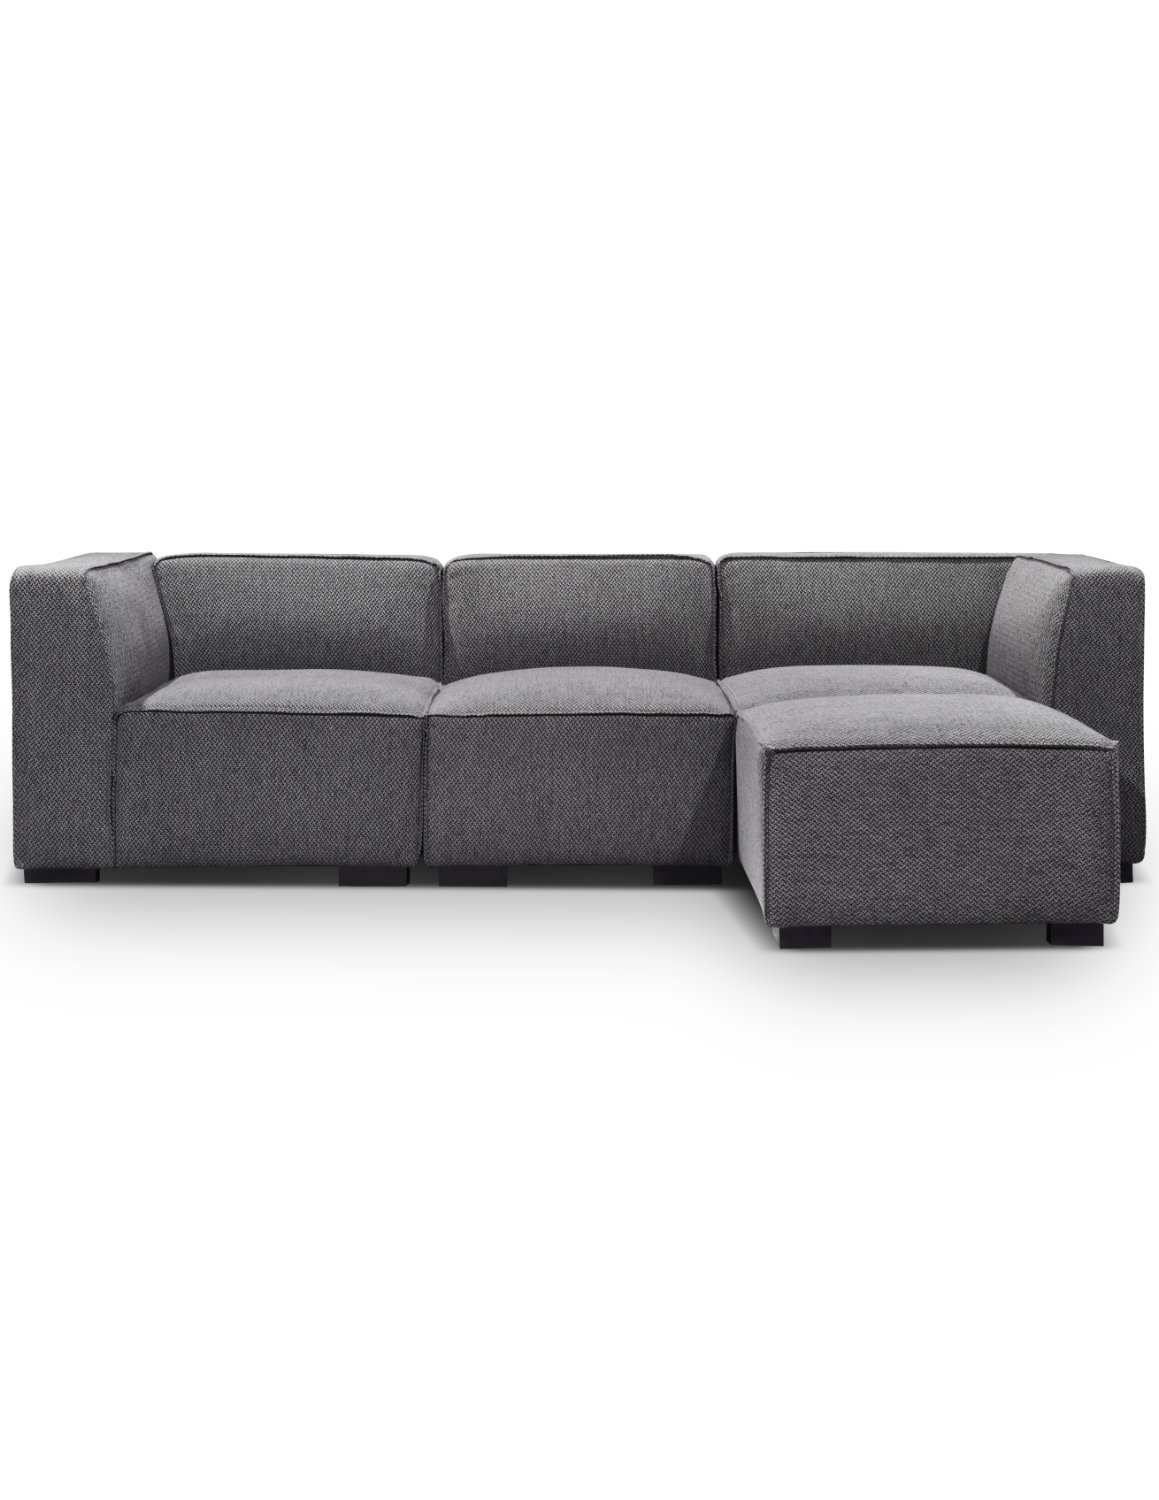 Soft-Cube: Modern Modular Sofa Set - Expand Furniture - Folding